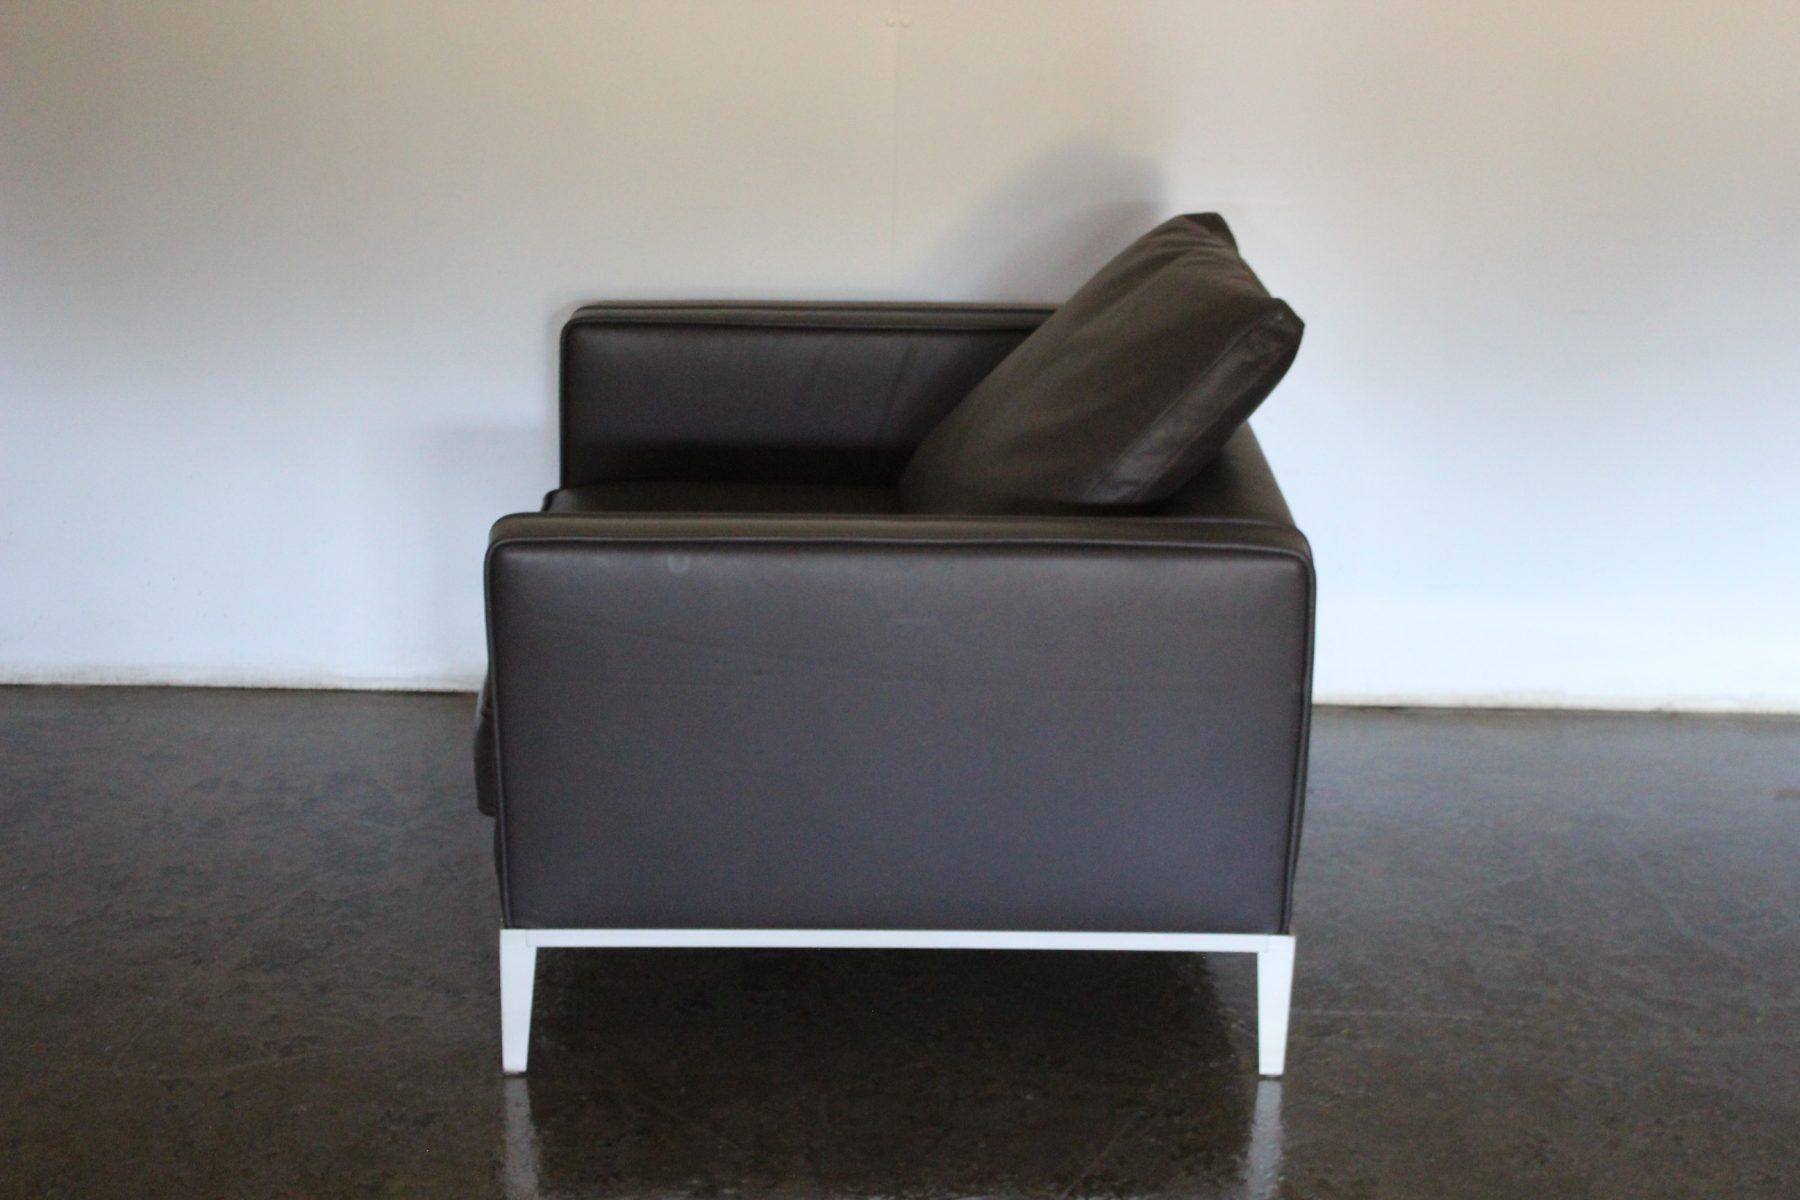 Mint B&B Italia “Simplice” Large Armchair in “Gamma” Dark-Brown Leather For Sale 6